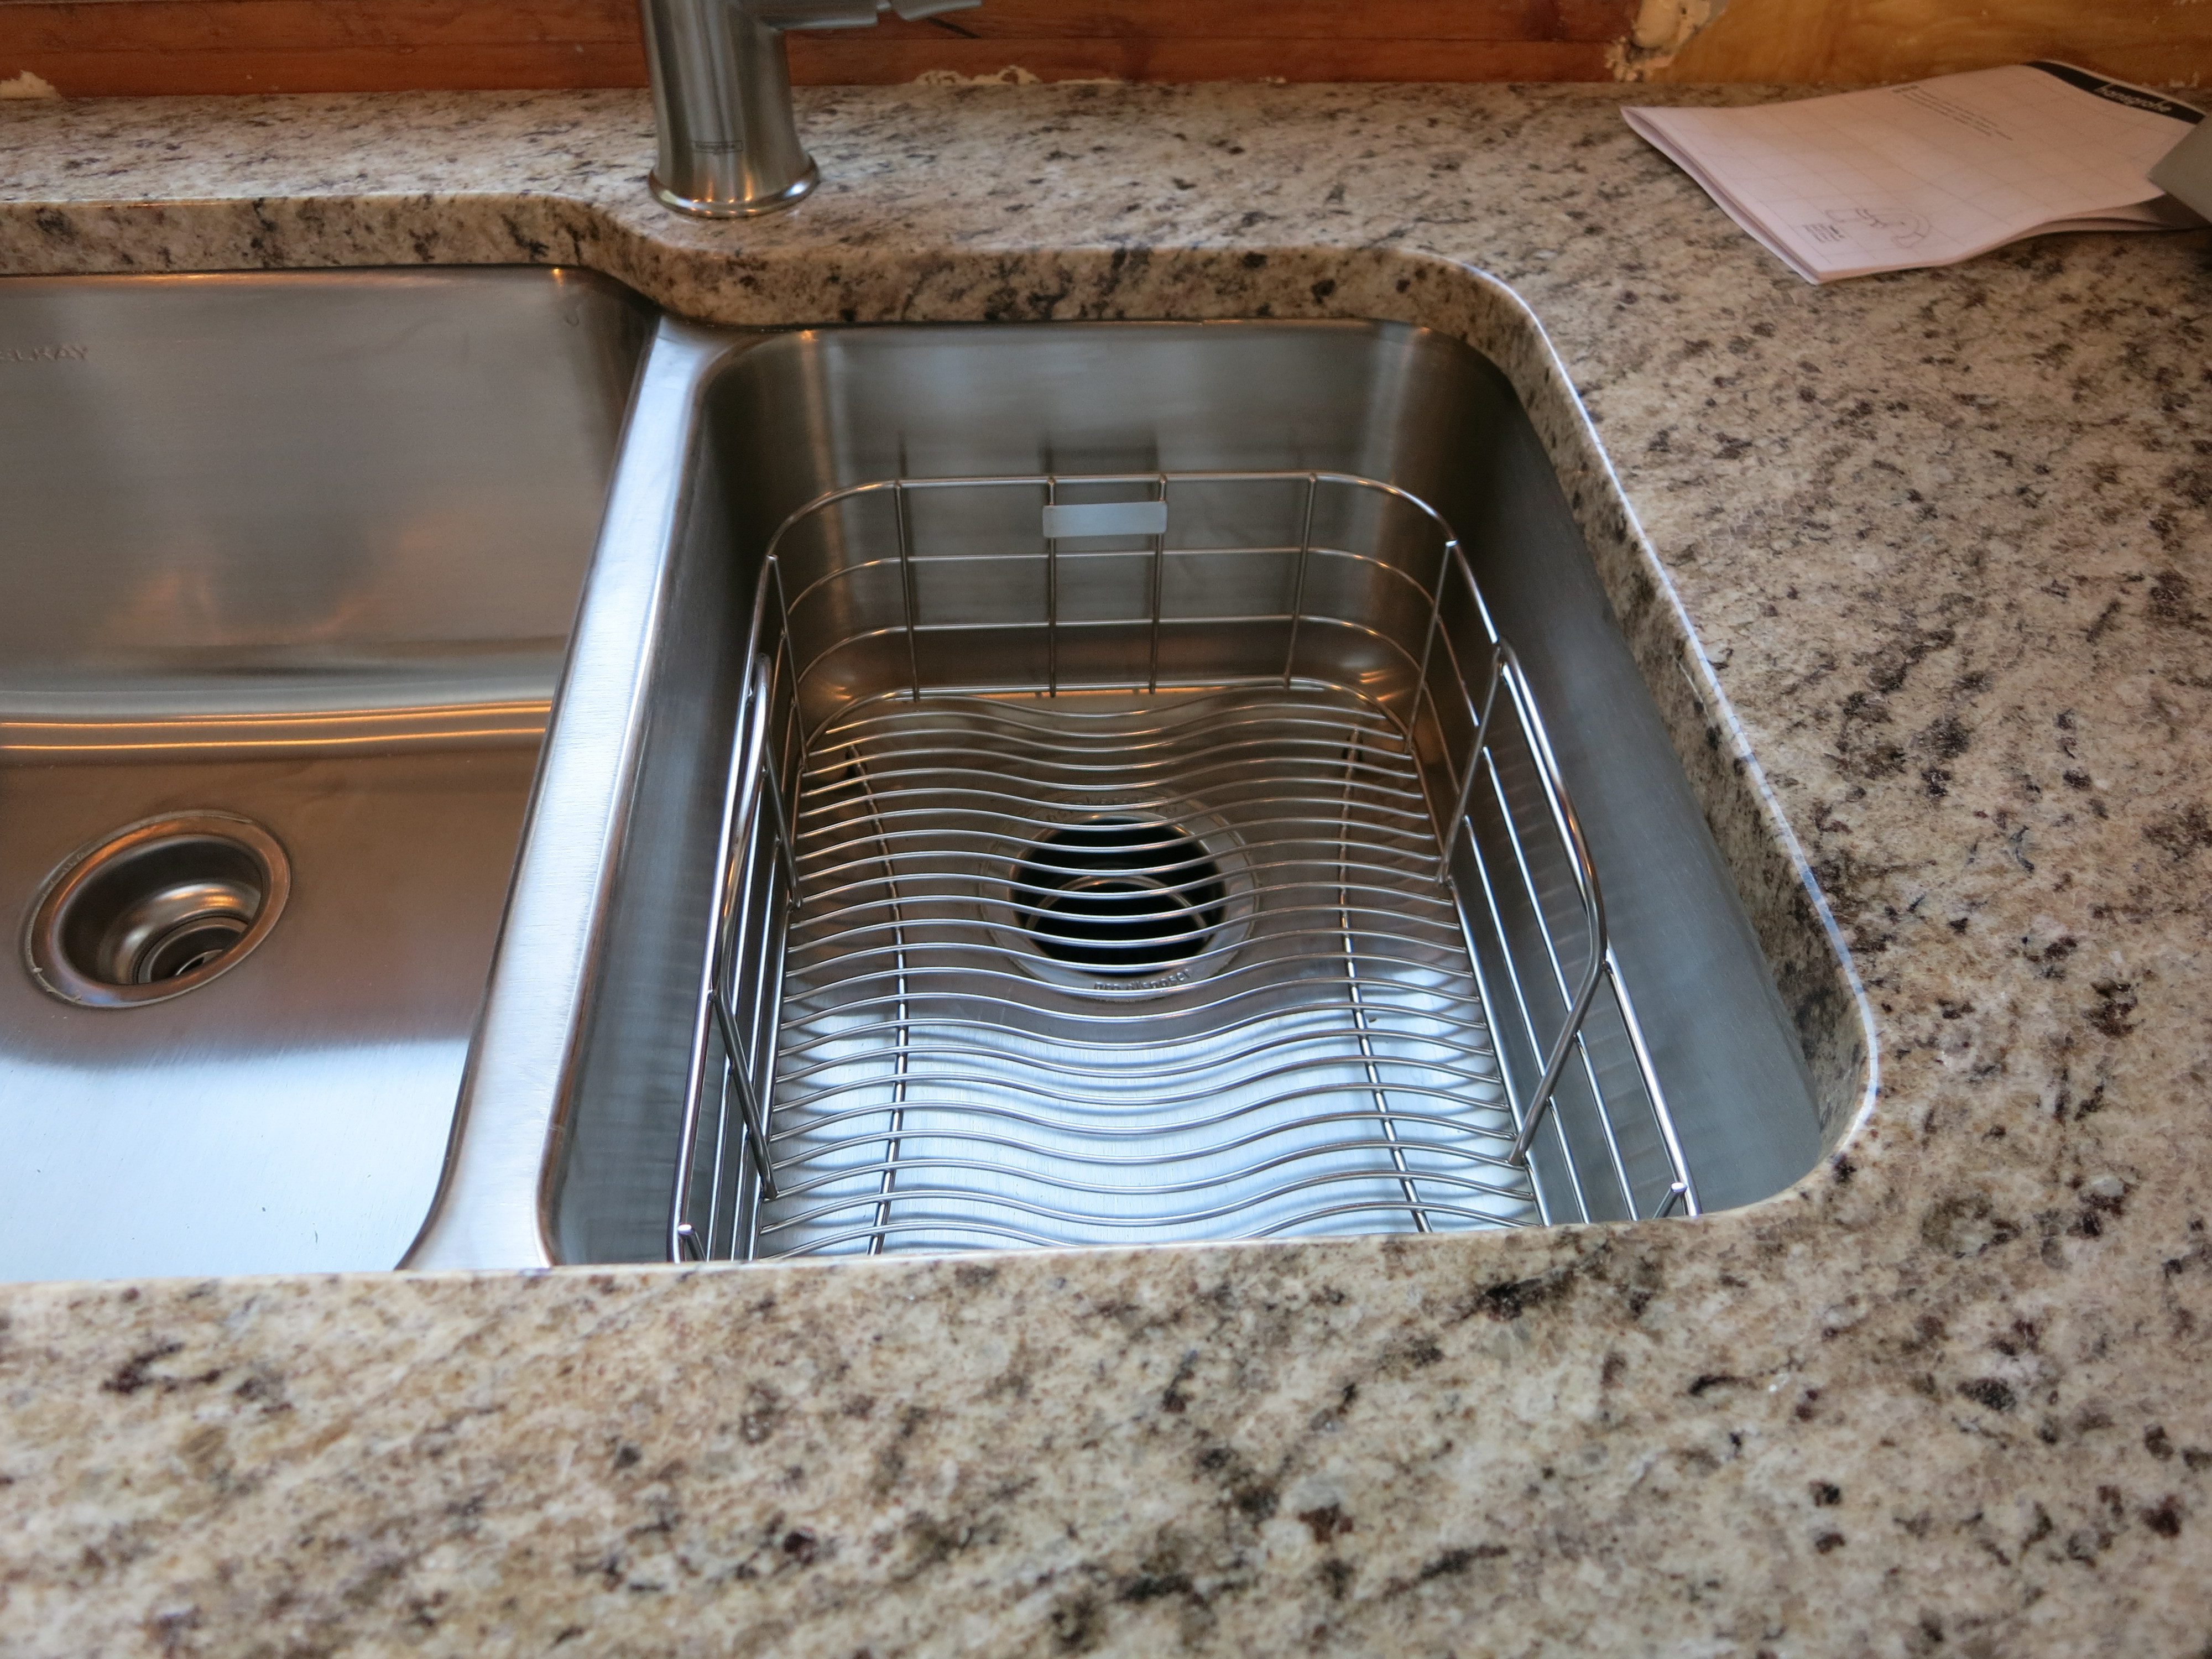 Stainless steel in-sink colander.